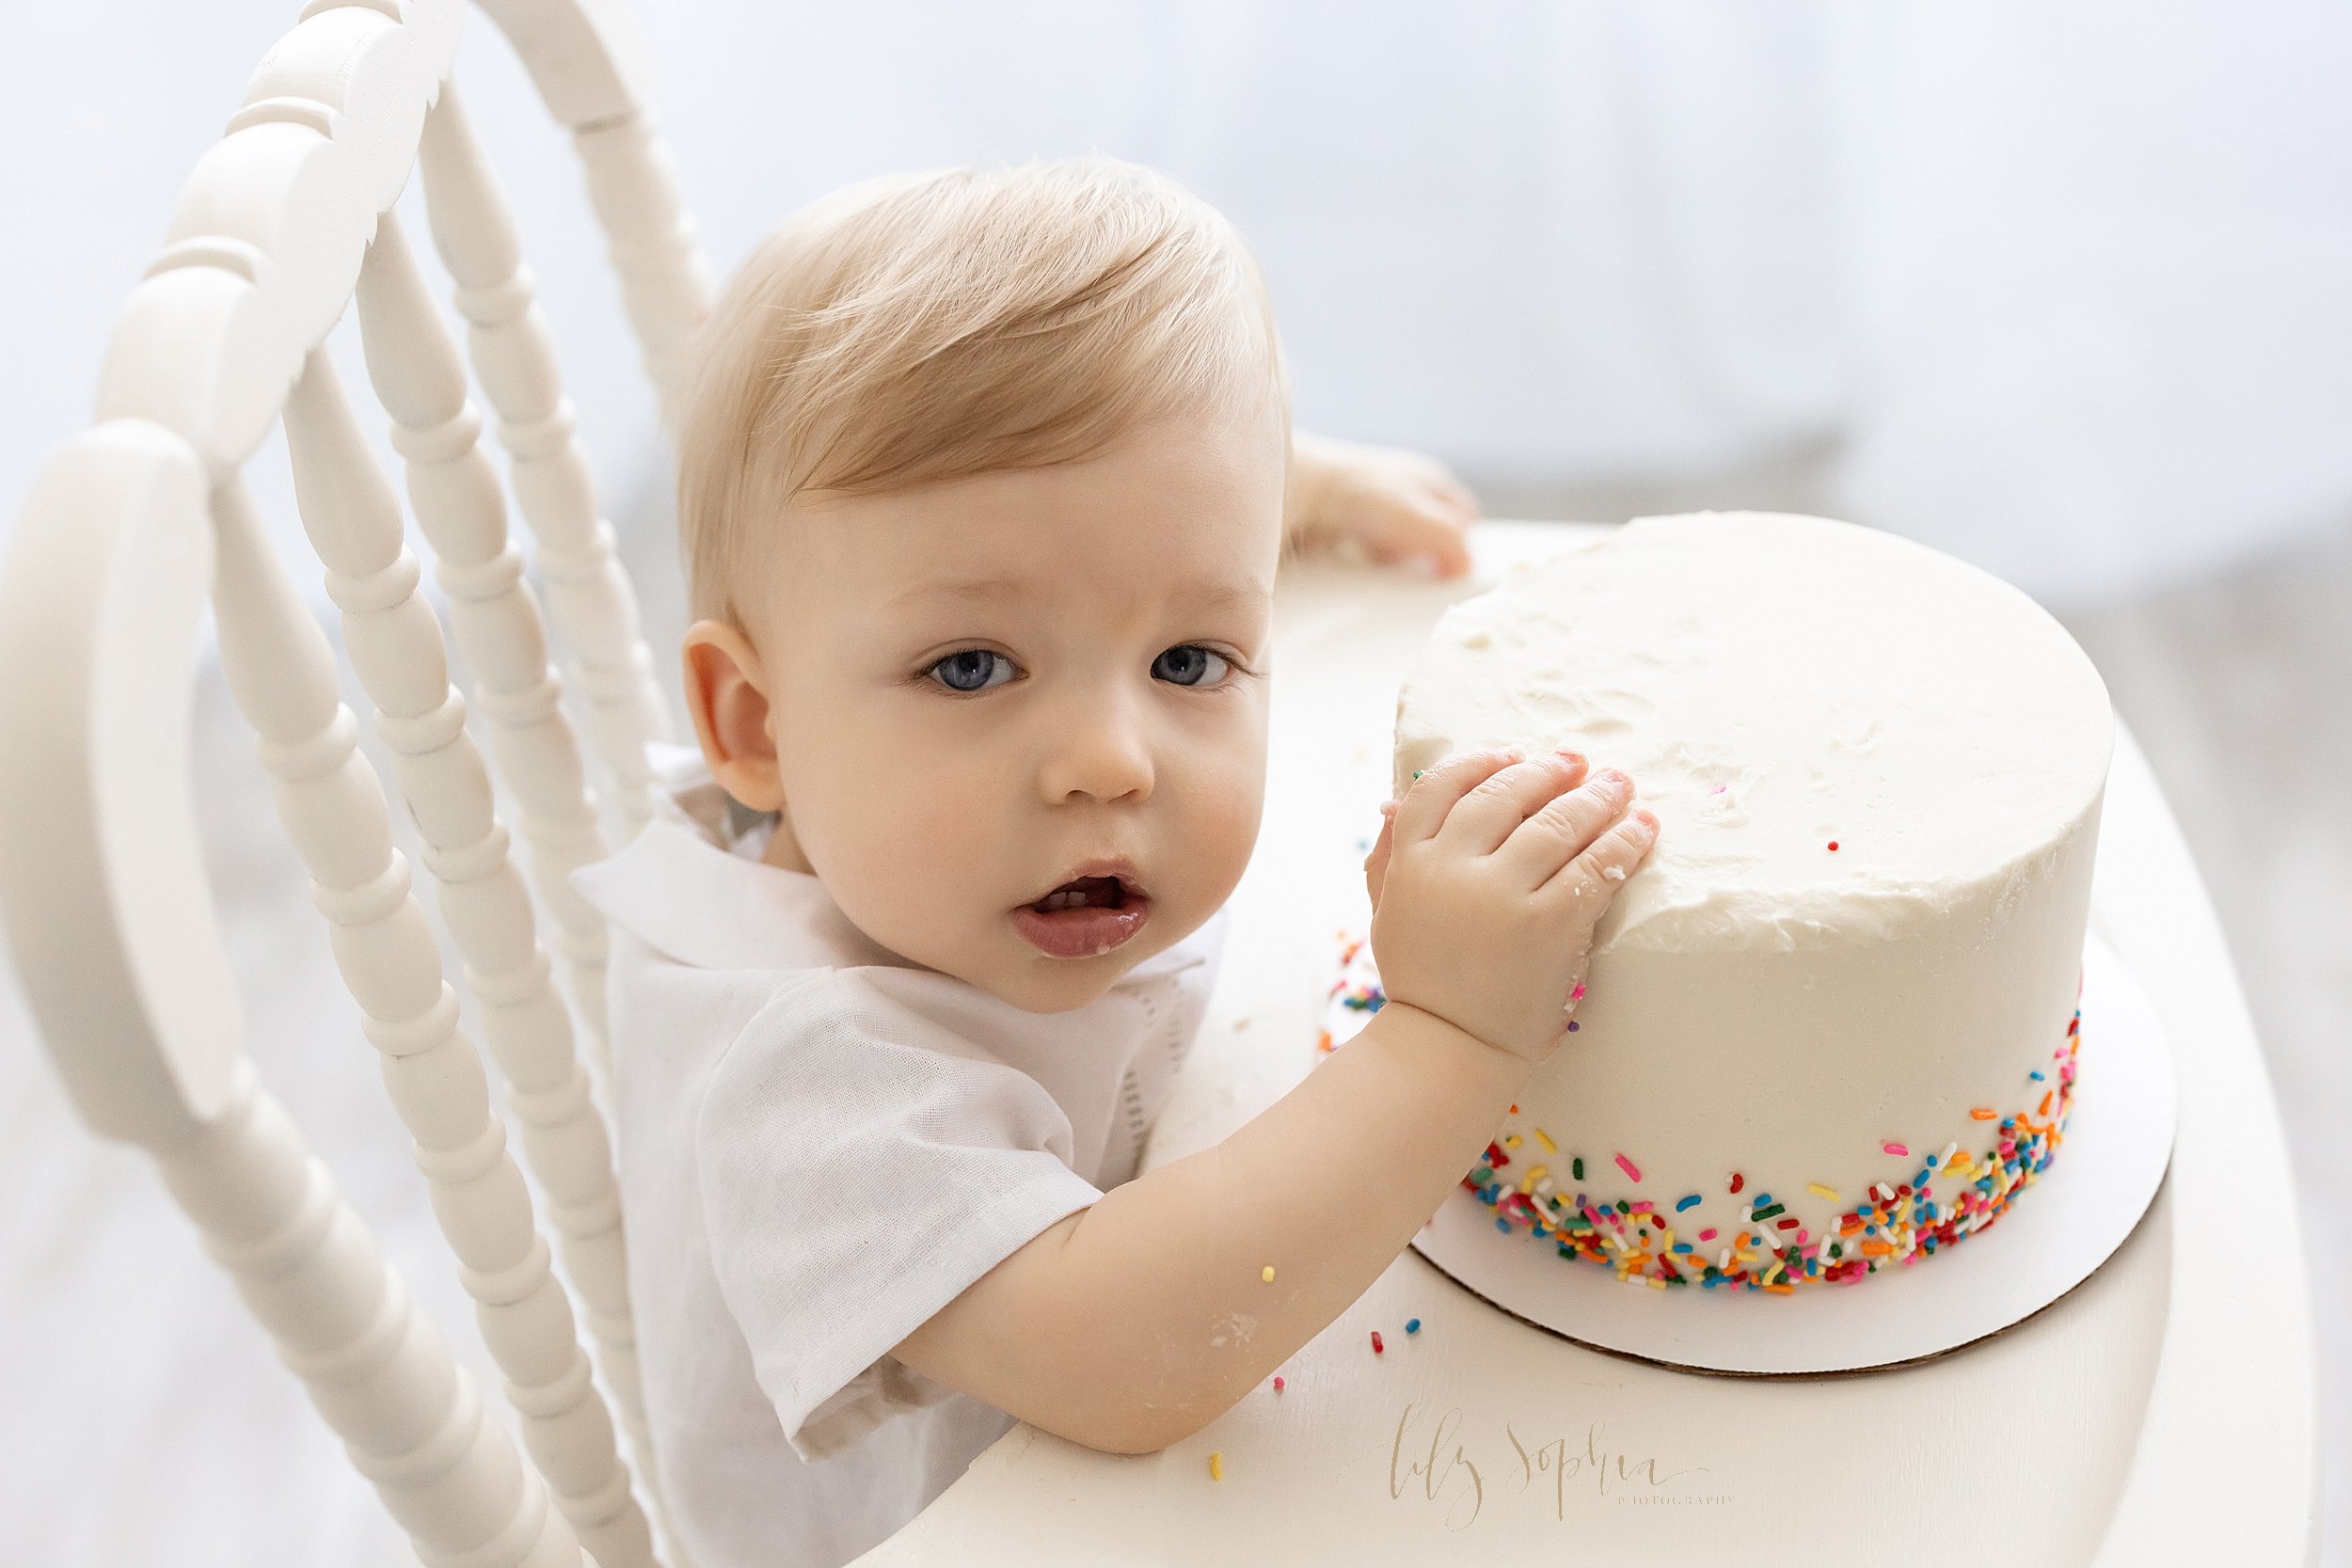 intown-atlanta-grant-park-kirkwood-first-birthday-portrait-baby-boy-family-photos-cake-smash_0201.jpg